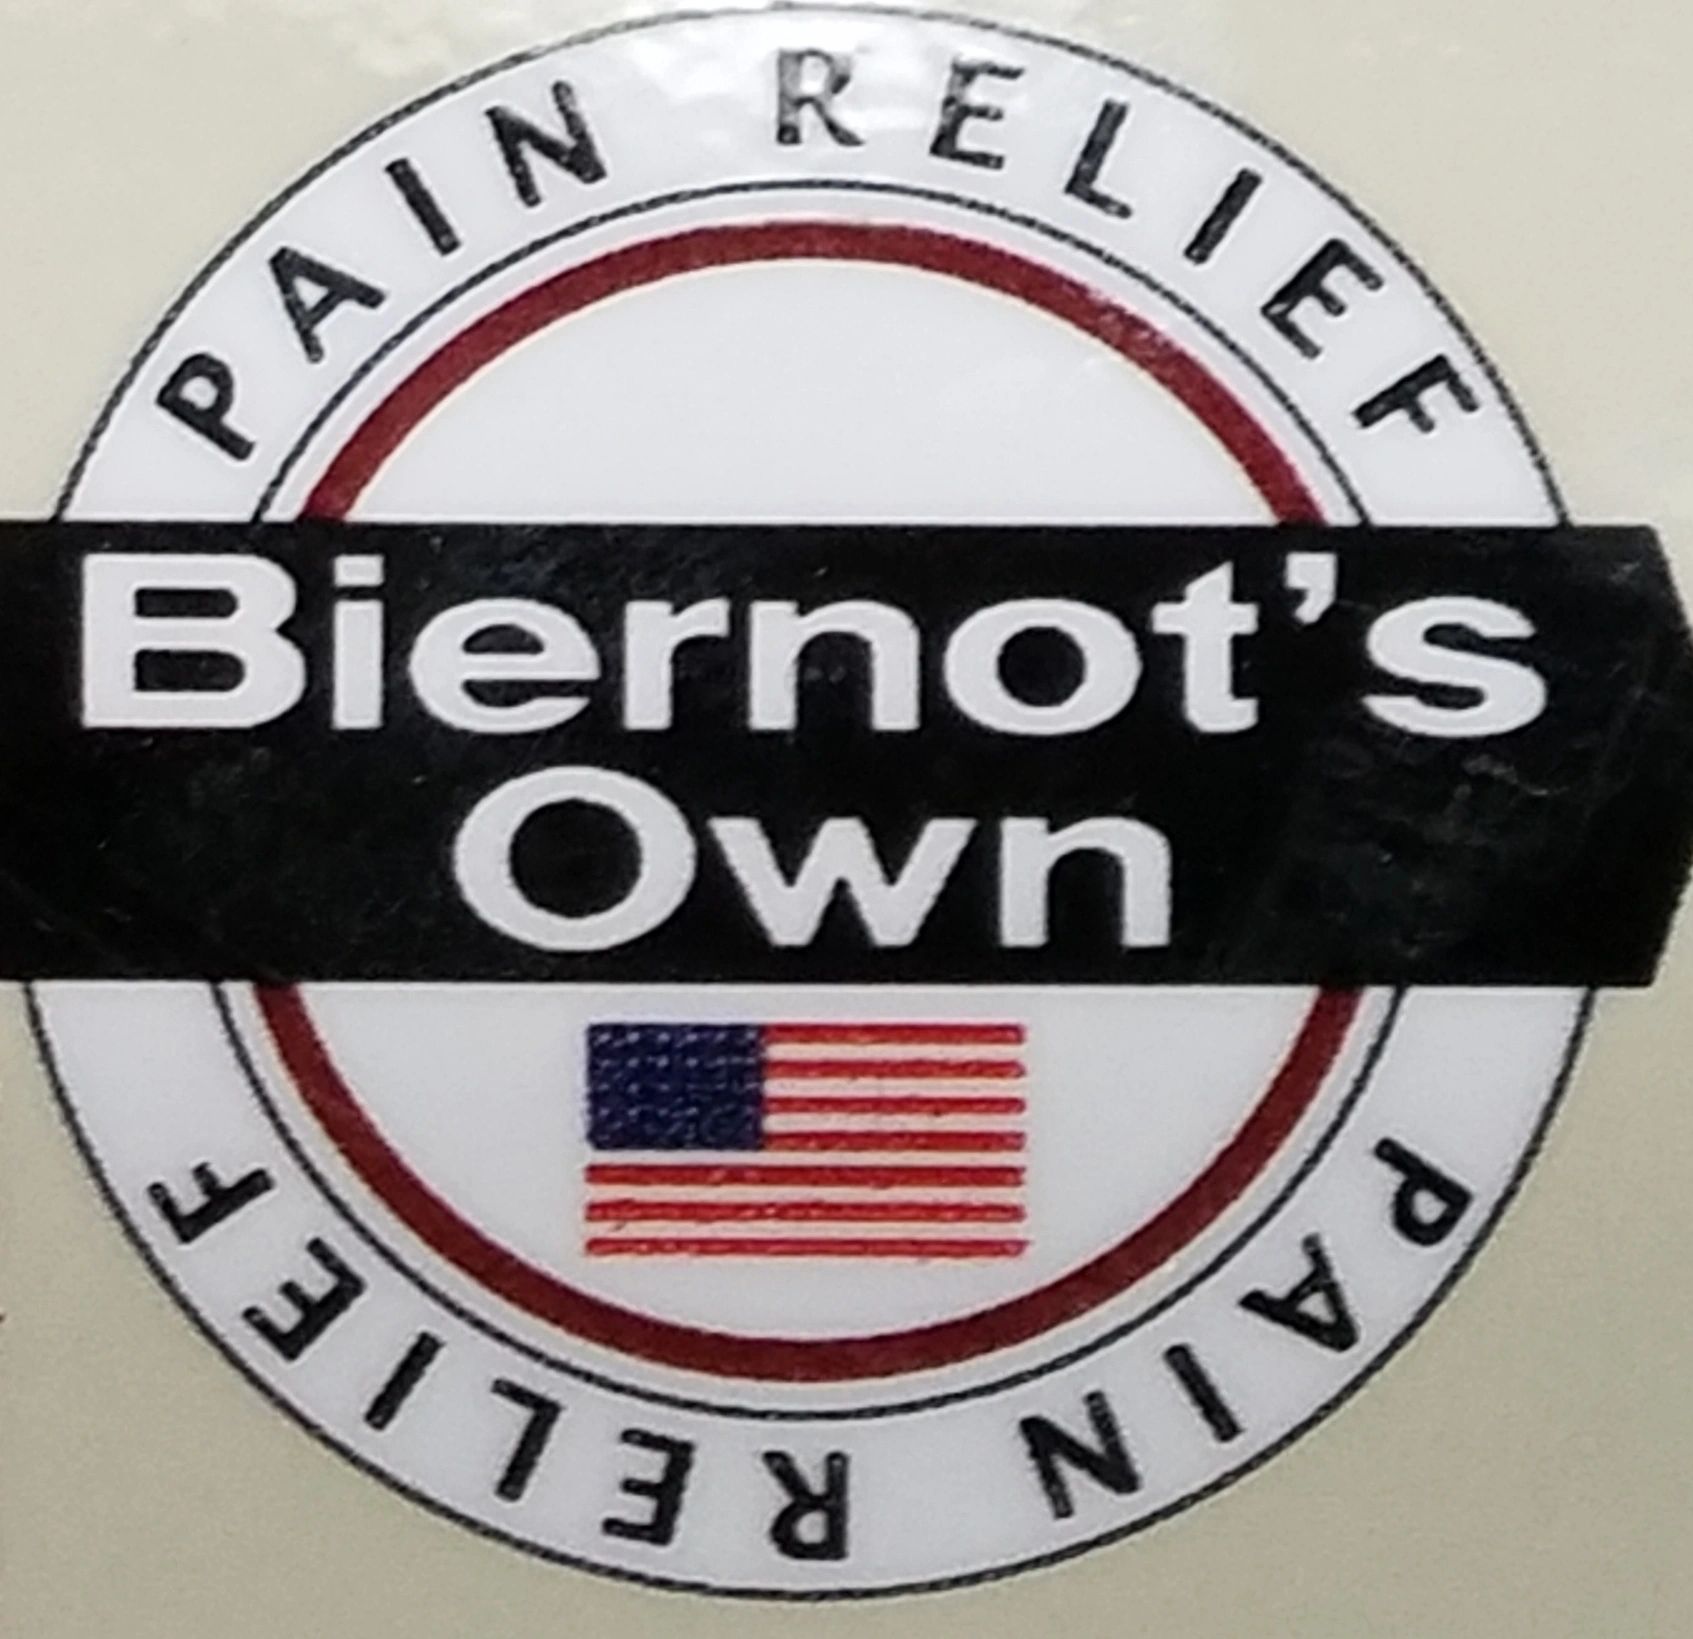 Biernot's Own logo